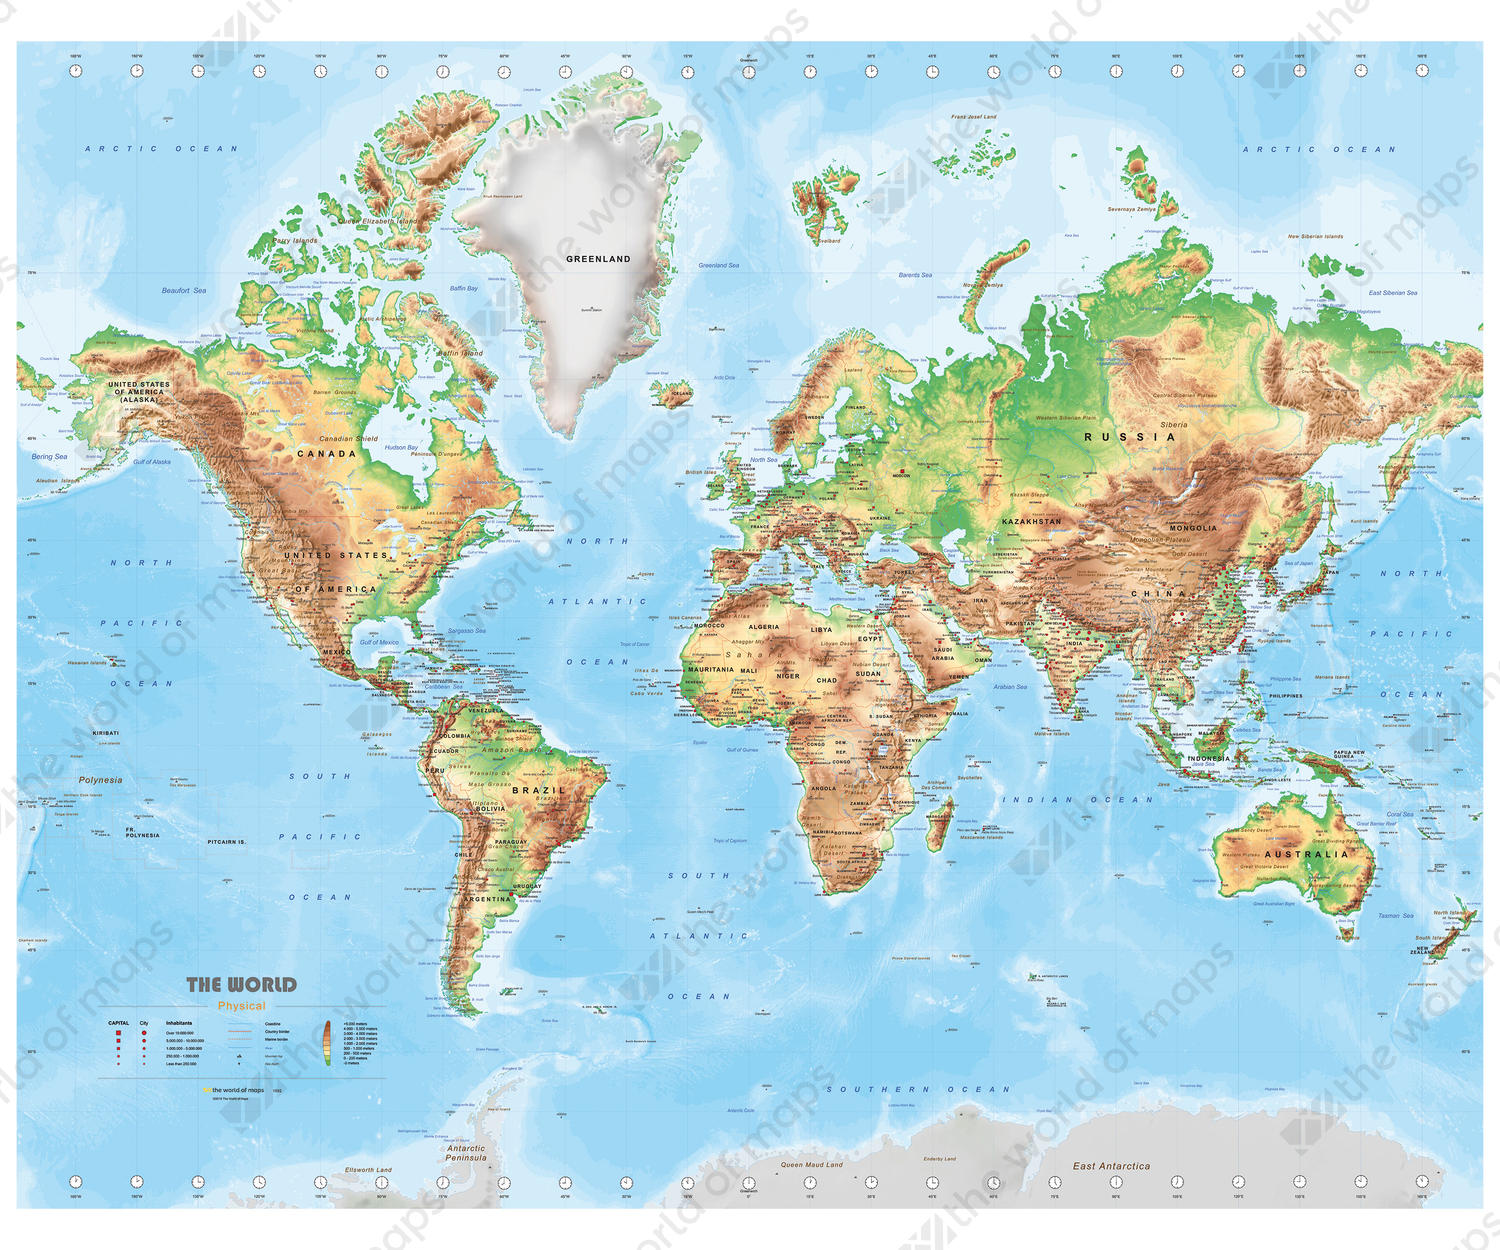 Digital physical map of The World medium.